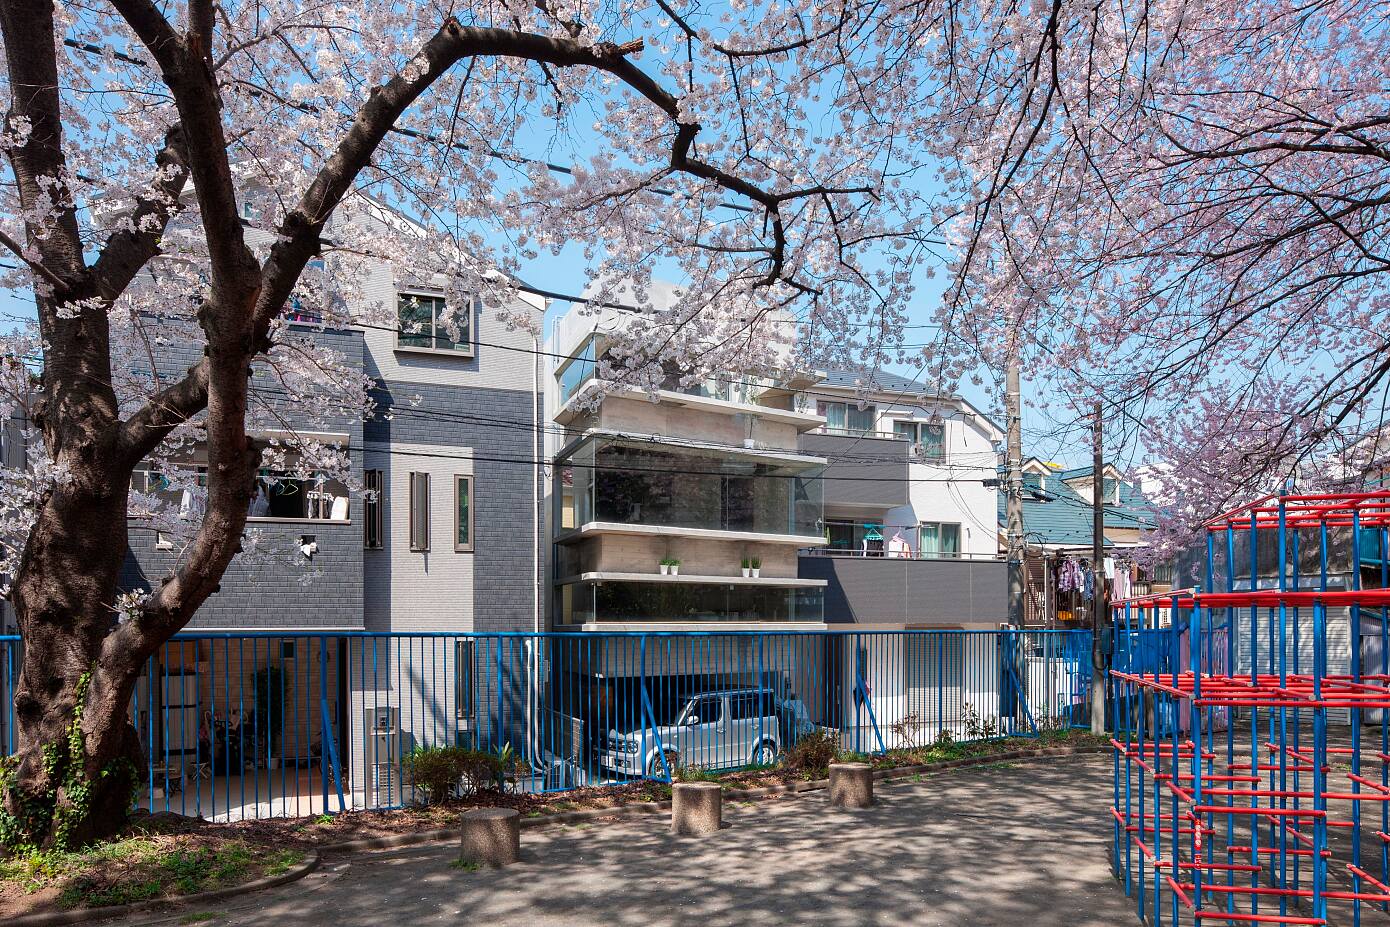 Oriel Window House by Shinsuke Fujii Architects